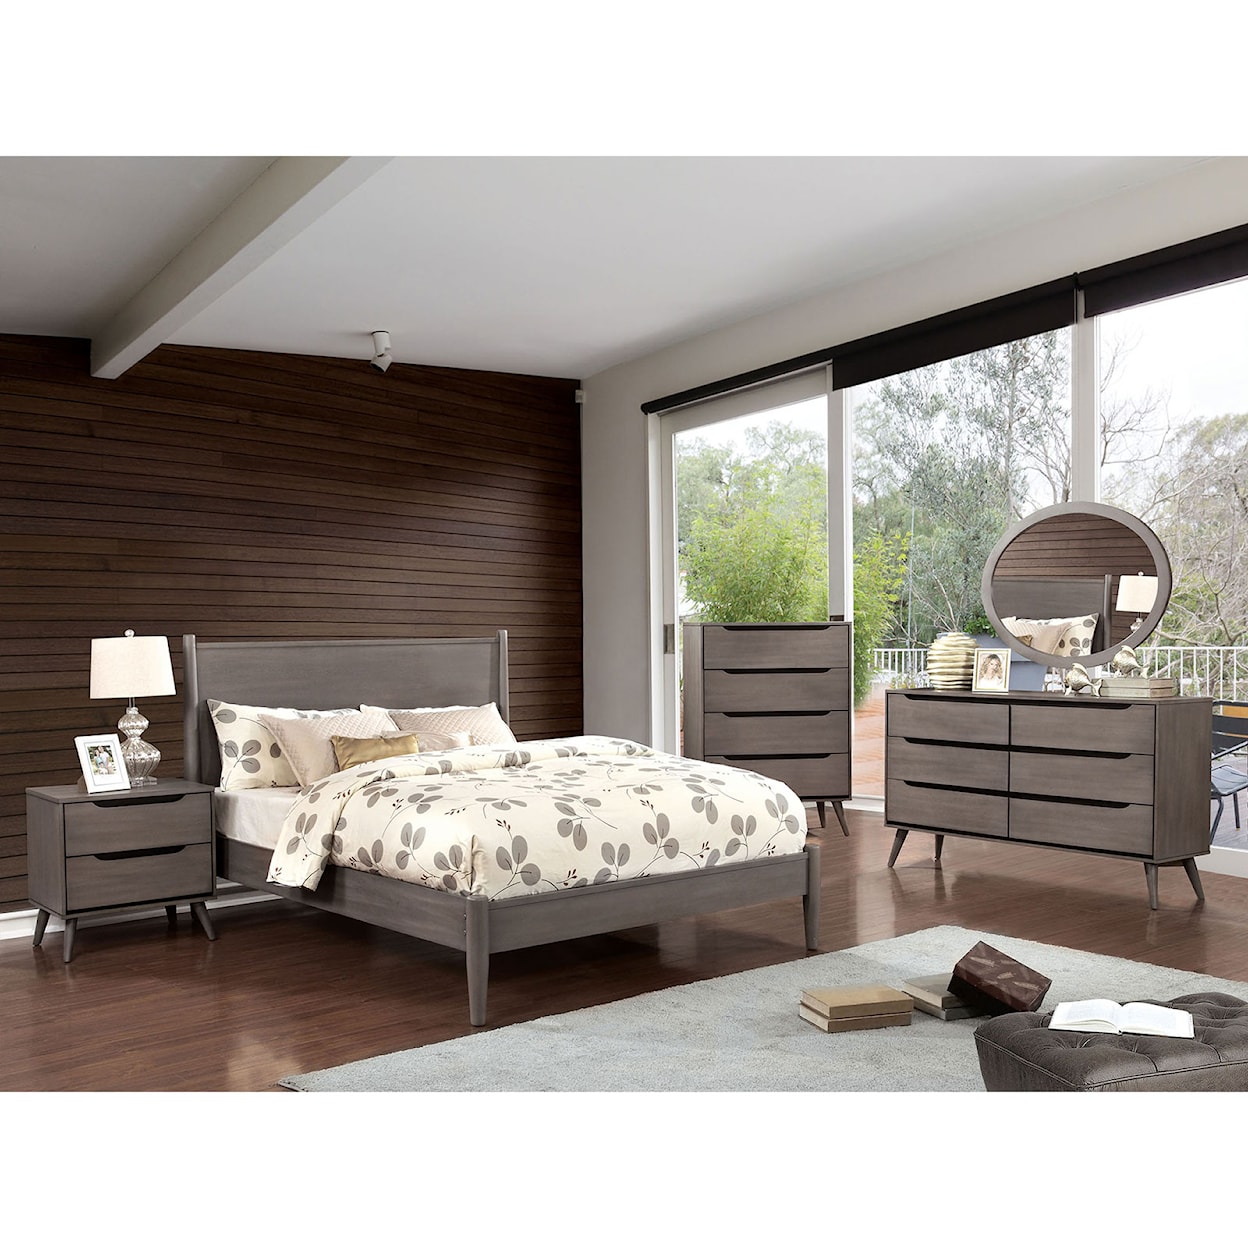 Furniture of America Lennart 4 Pc. Full Bedroom Set w/ Oval Mirror